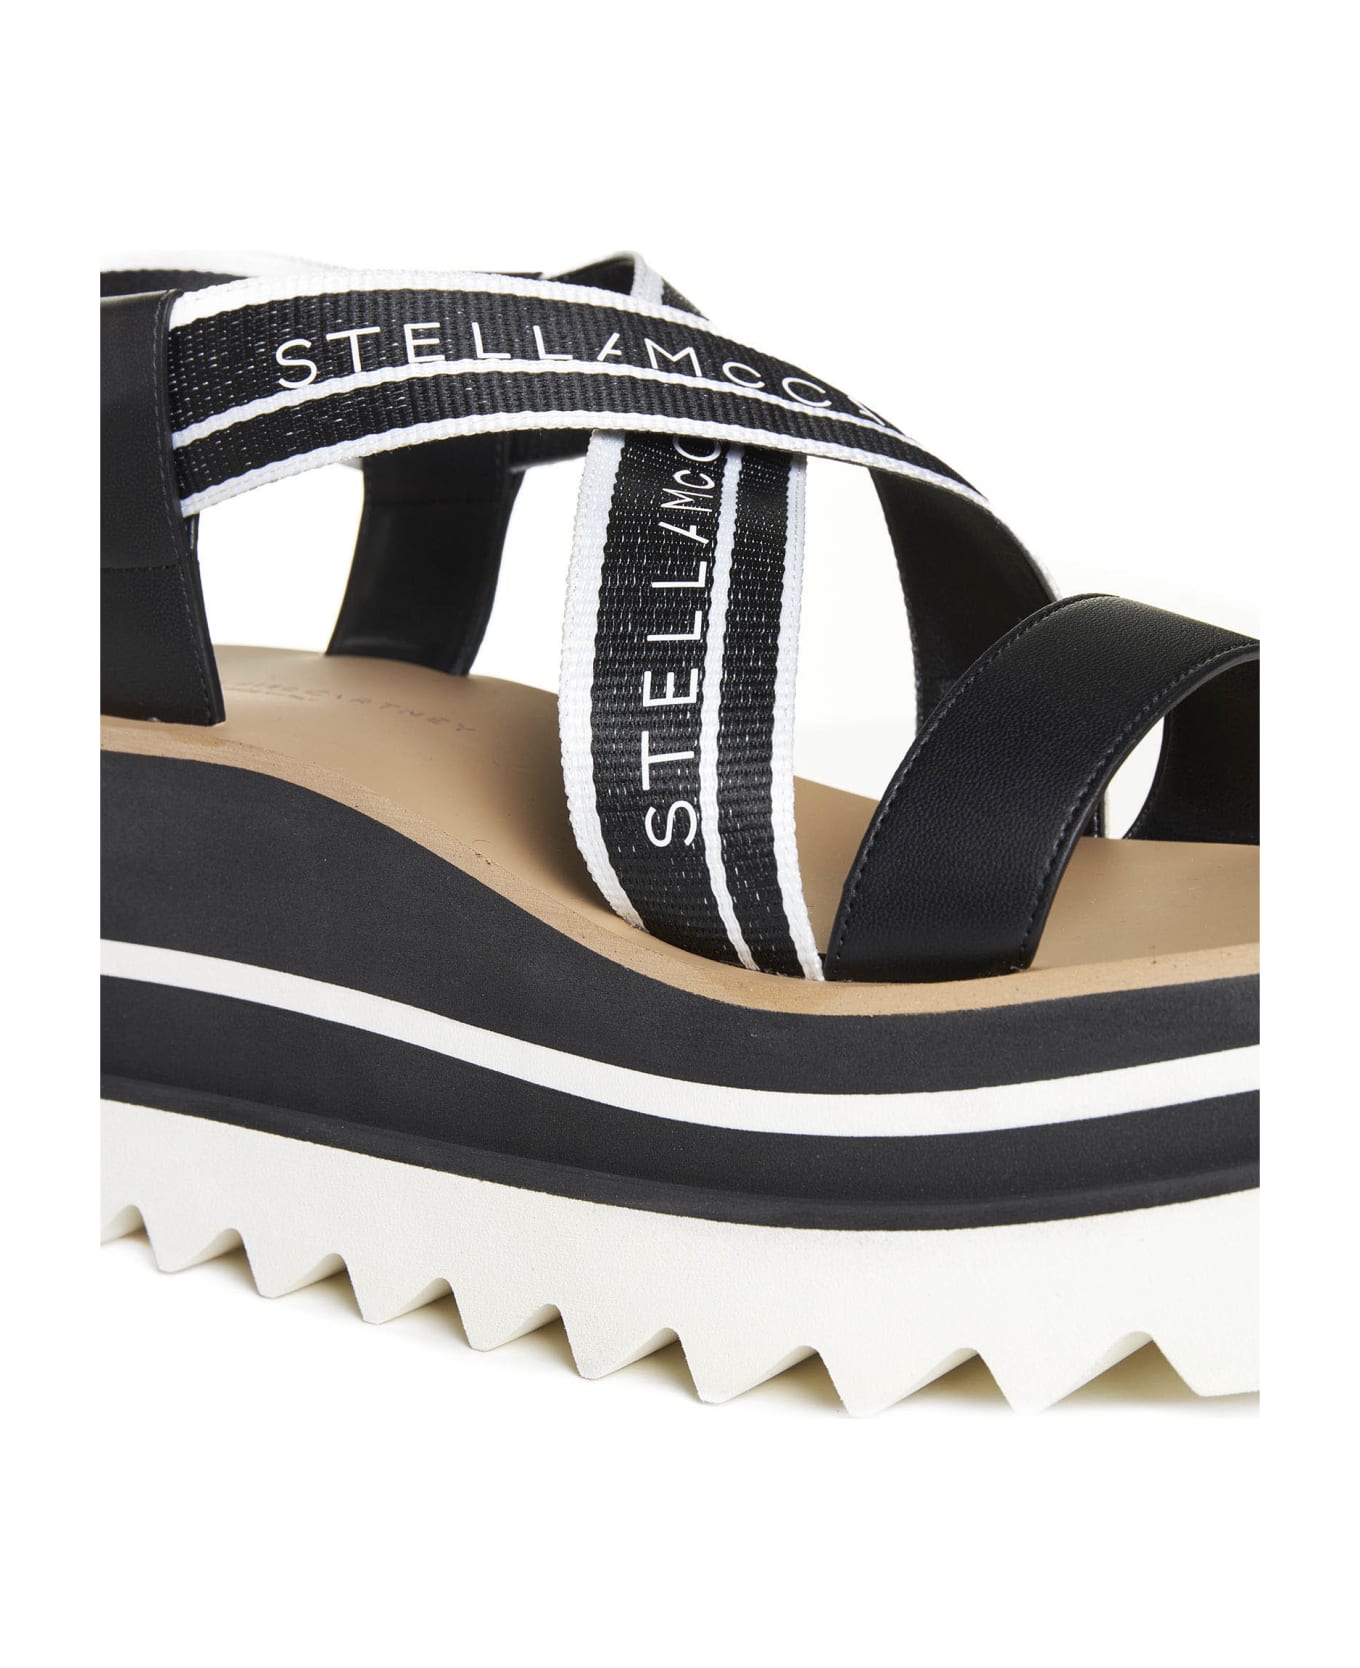 Stella McCartney Sneak Elyse Sandals - Black/white